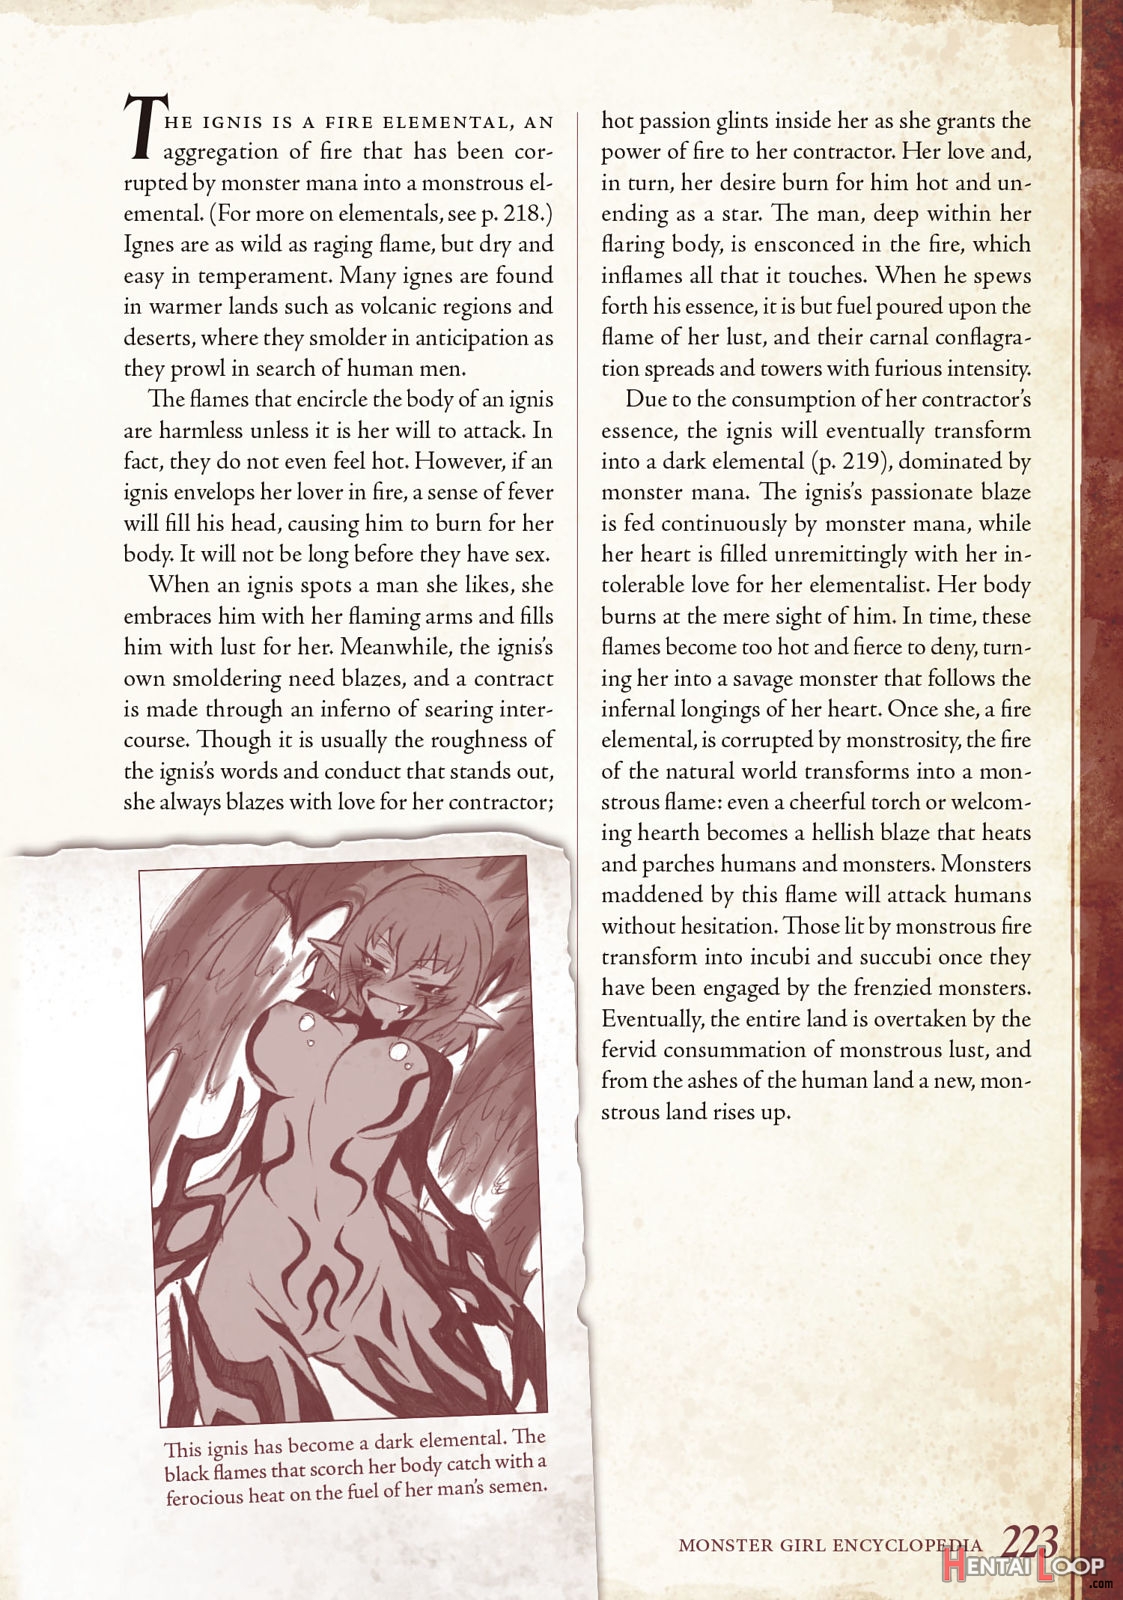 Monster Girl Encyclopedia Vol. 1 page 224